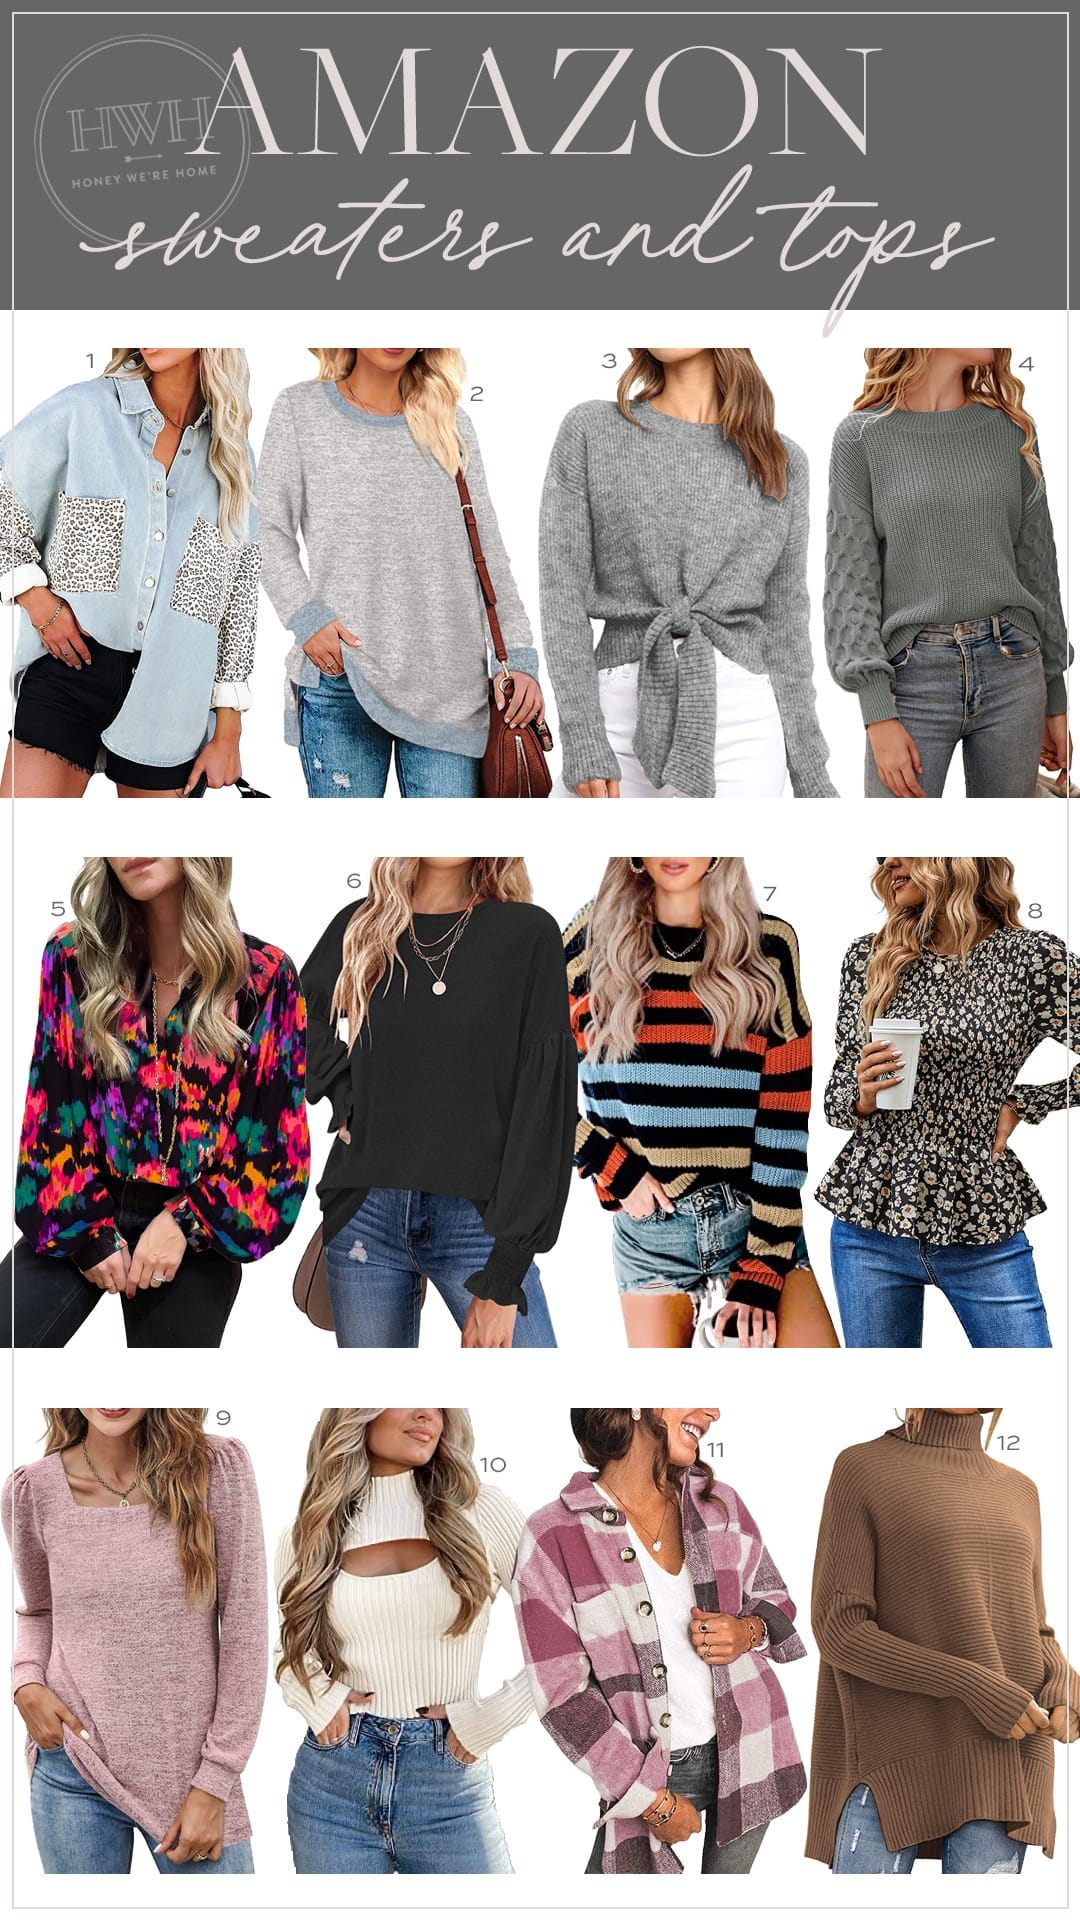 Amazon Sweater & Tops 